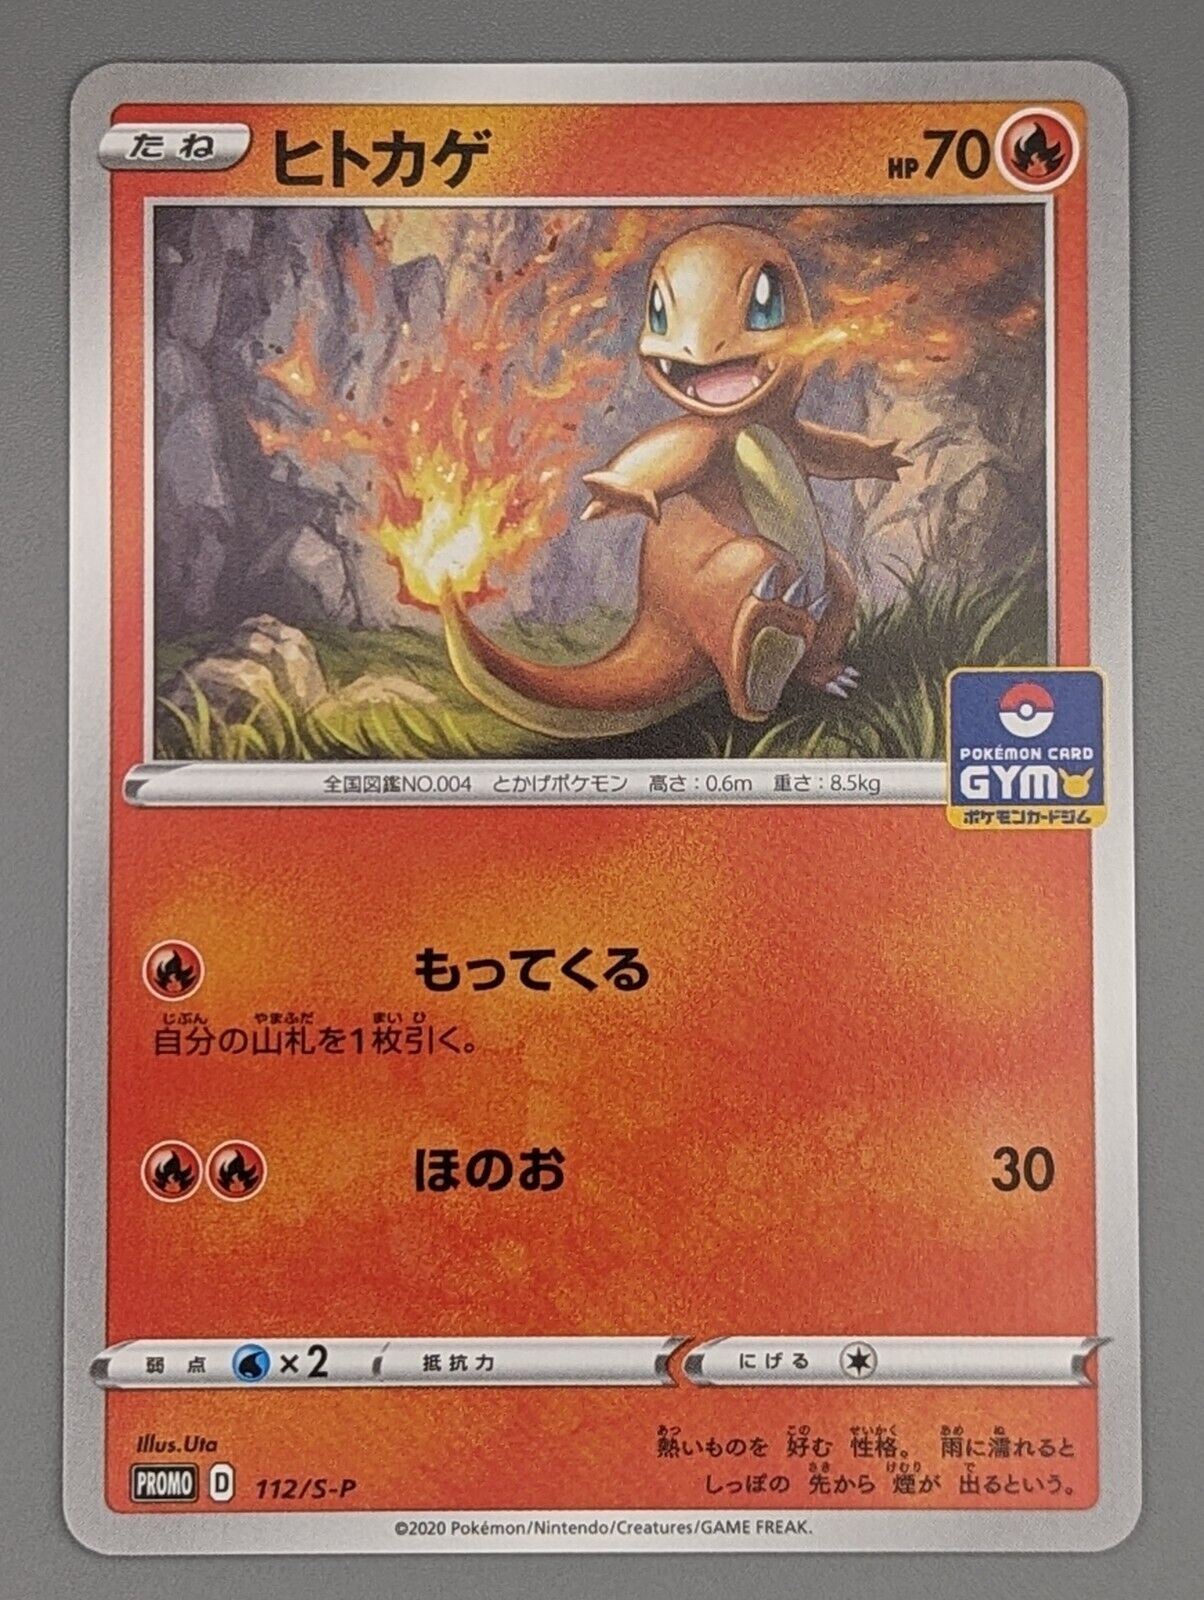 Charmander 112/S-P Gym Promo Japanese Pokemon Card